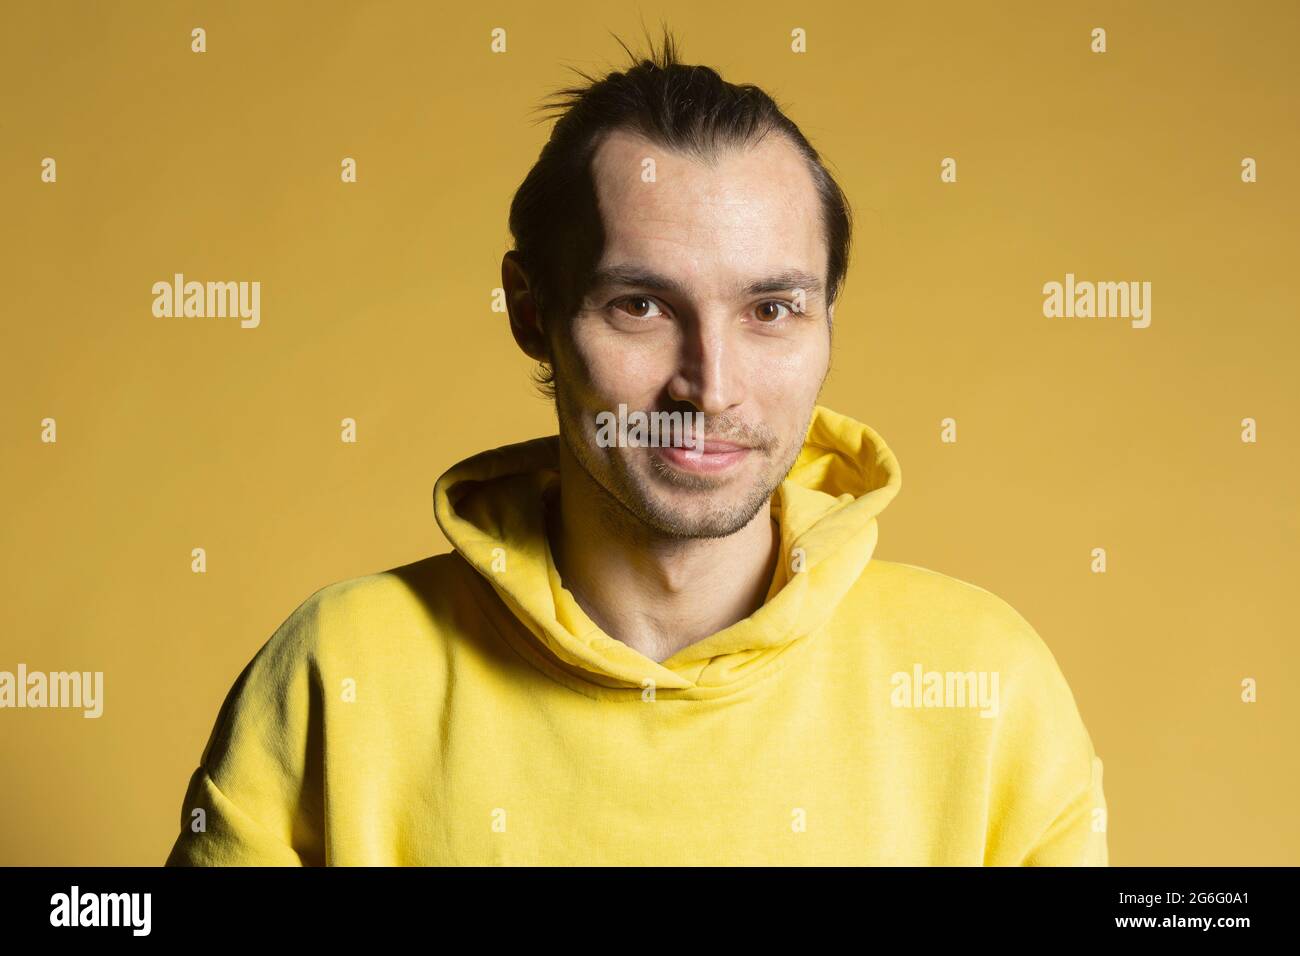 Portrait smiling man in yellow hooded sweatshirt Stock Photo